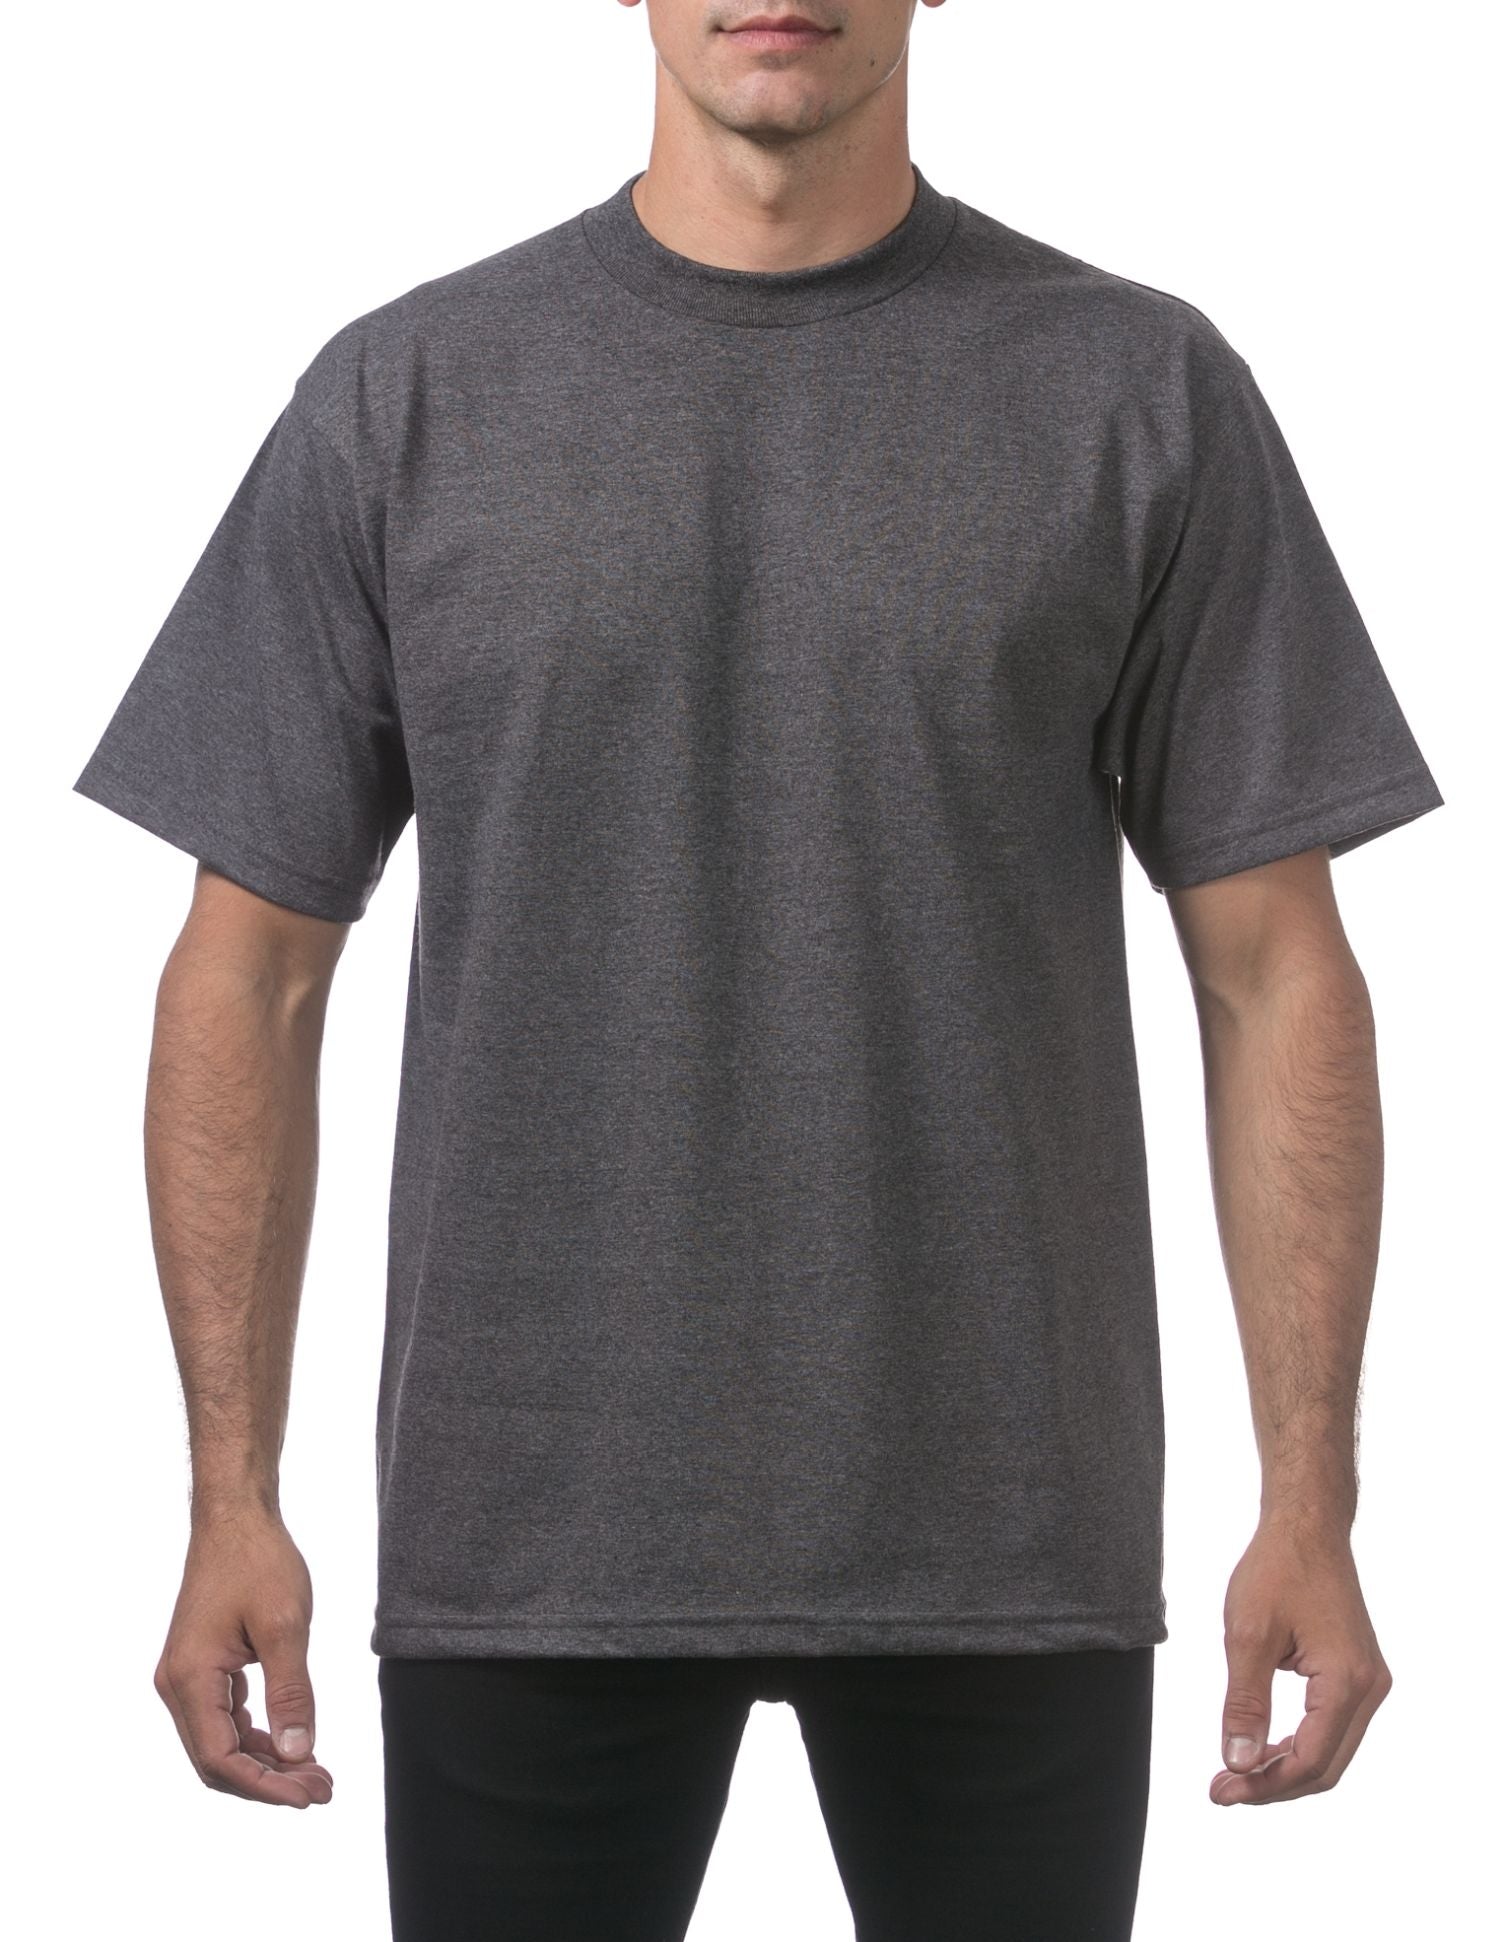 Pro Club Men's Heavyweight Cotton Short Sleeve Crew Neck T-Shirt, Charcoal, Medium